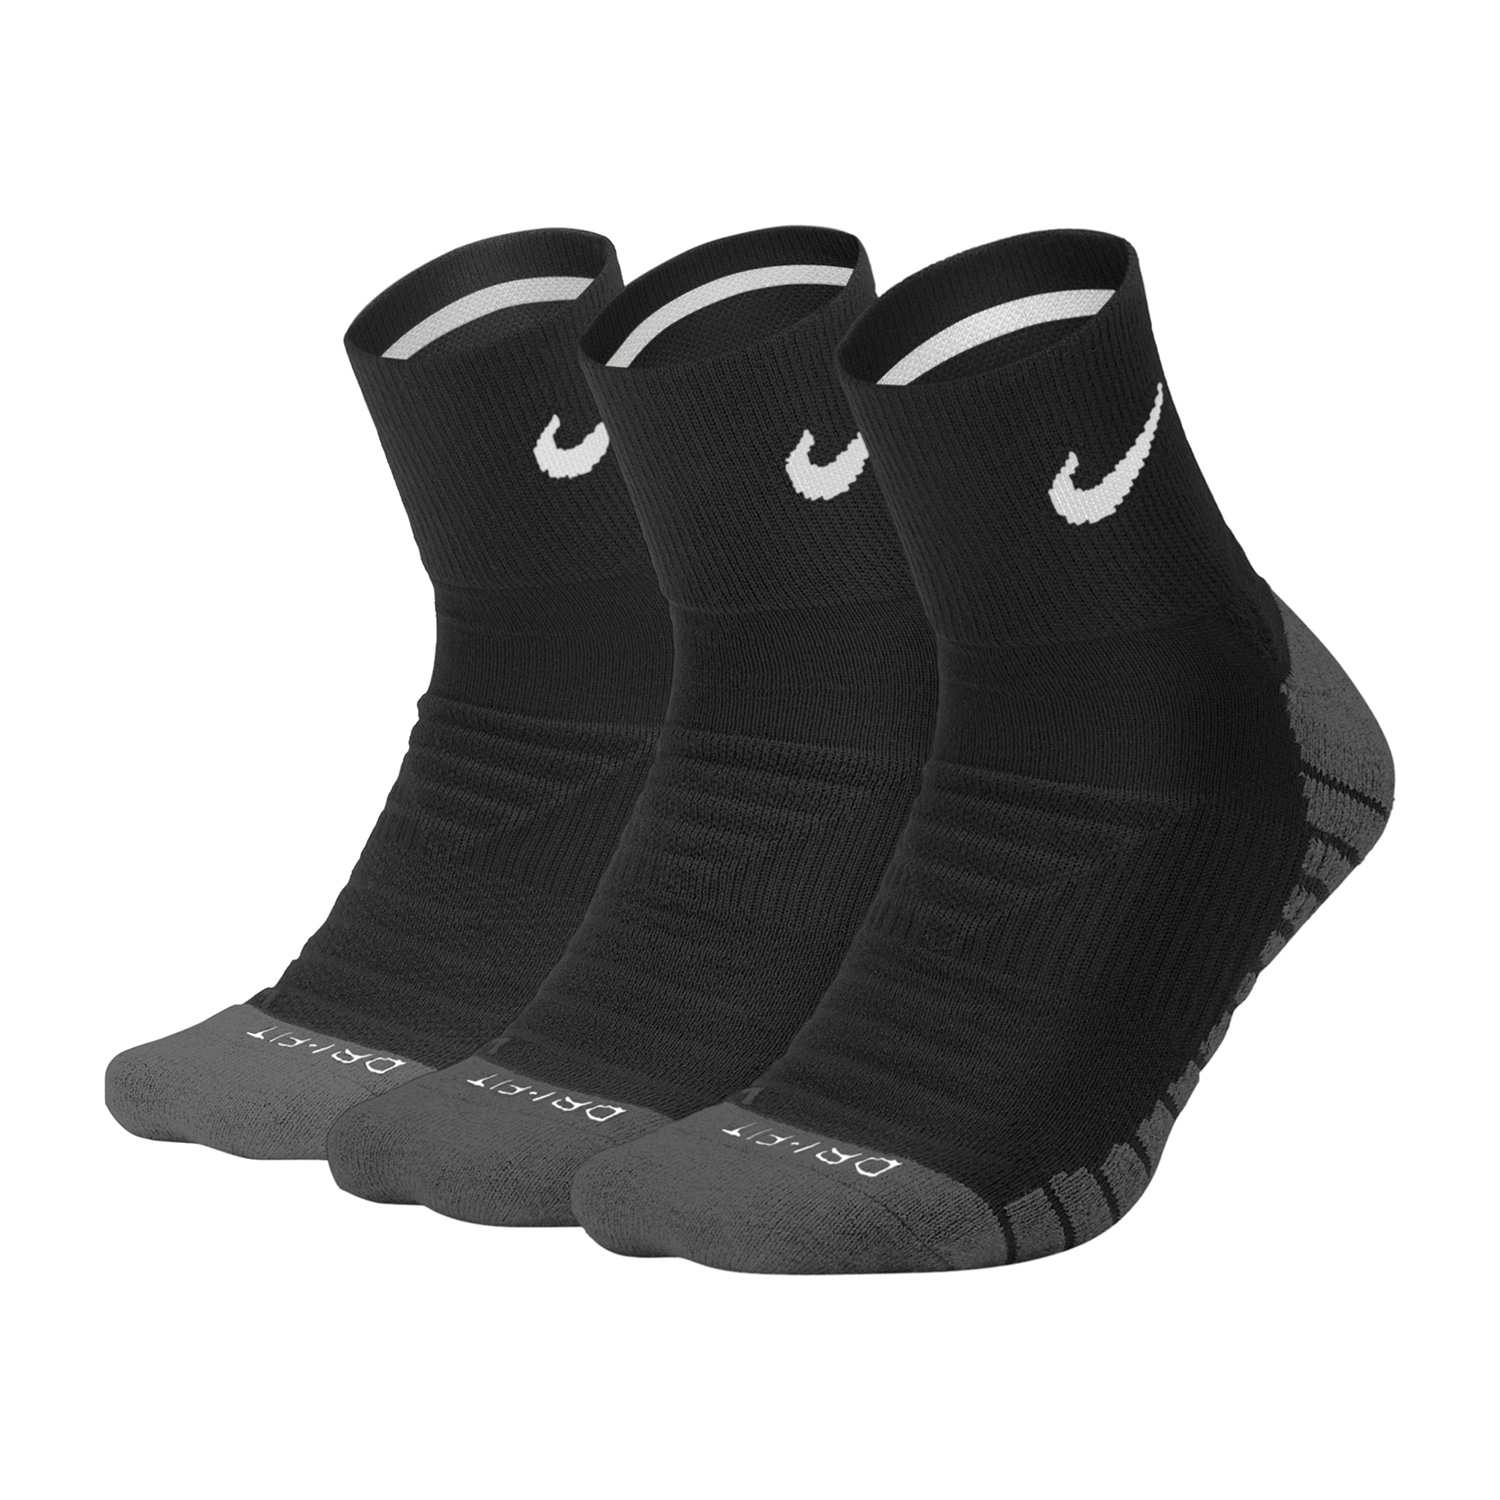 Nike Dry Cushion x 3 Socks - Black/Anthracite/White